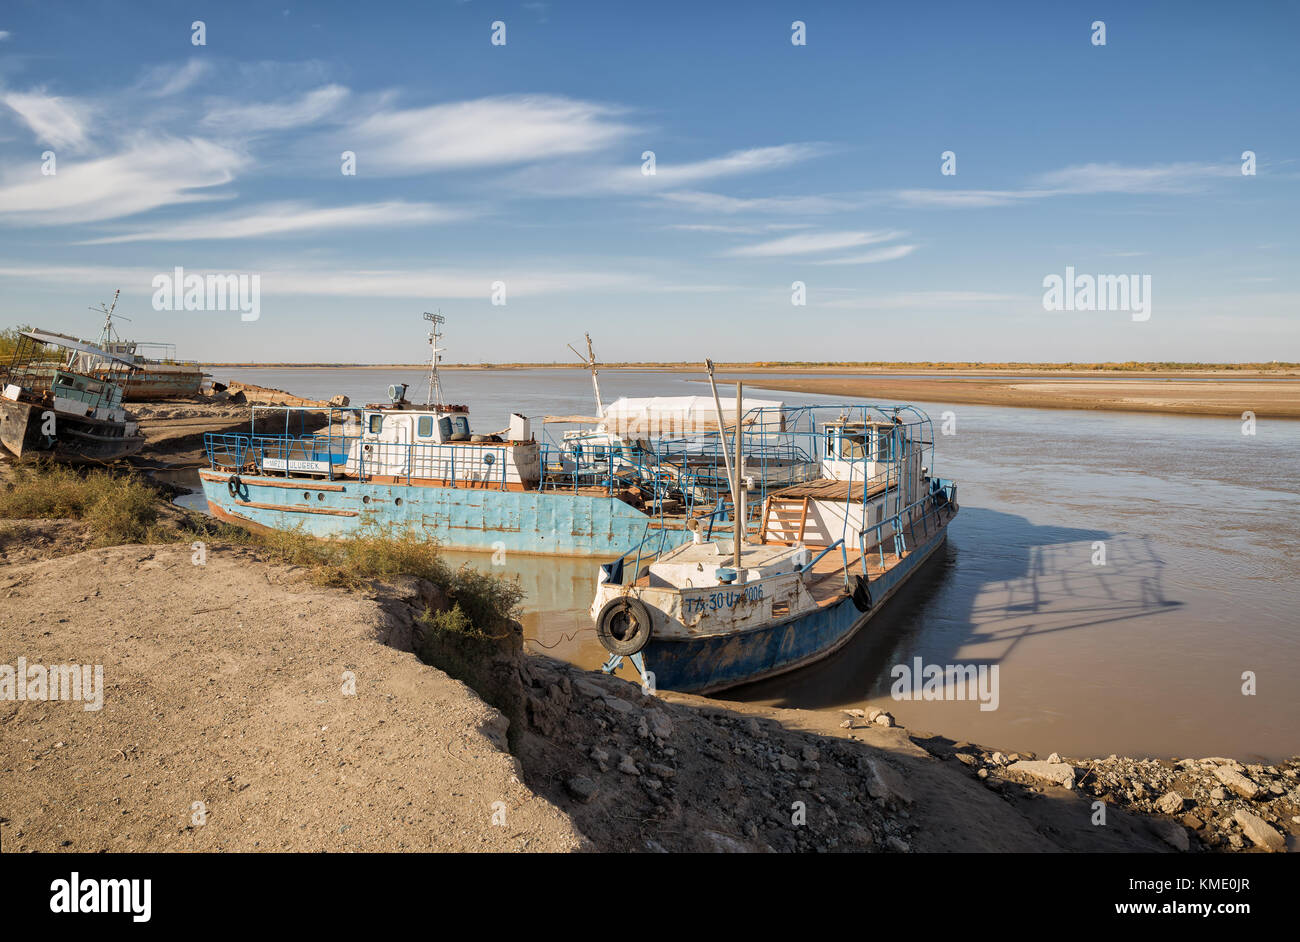 Regione di Khorezm, Uzbekistan - ottobre 21, 2016: Amu Darya river. vecchie navi ormeggiate alla riva Foto Stock